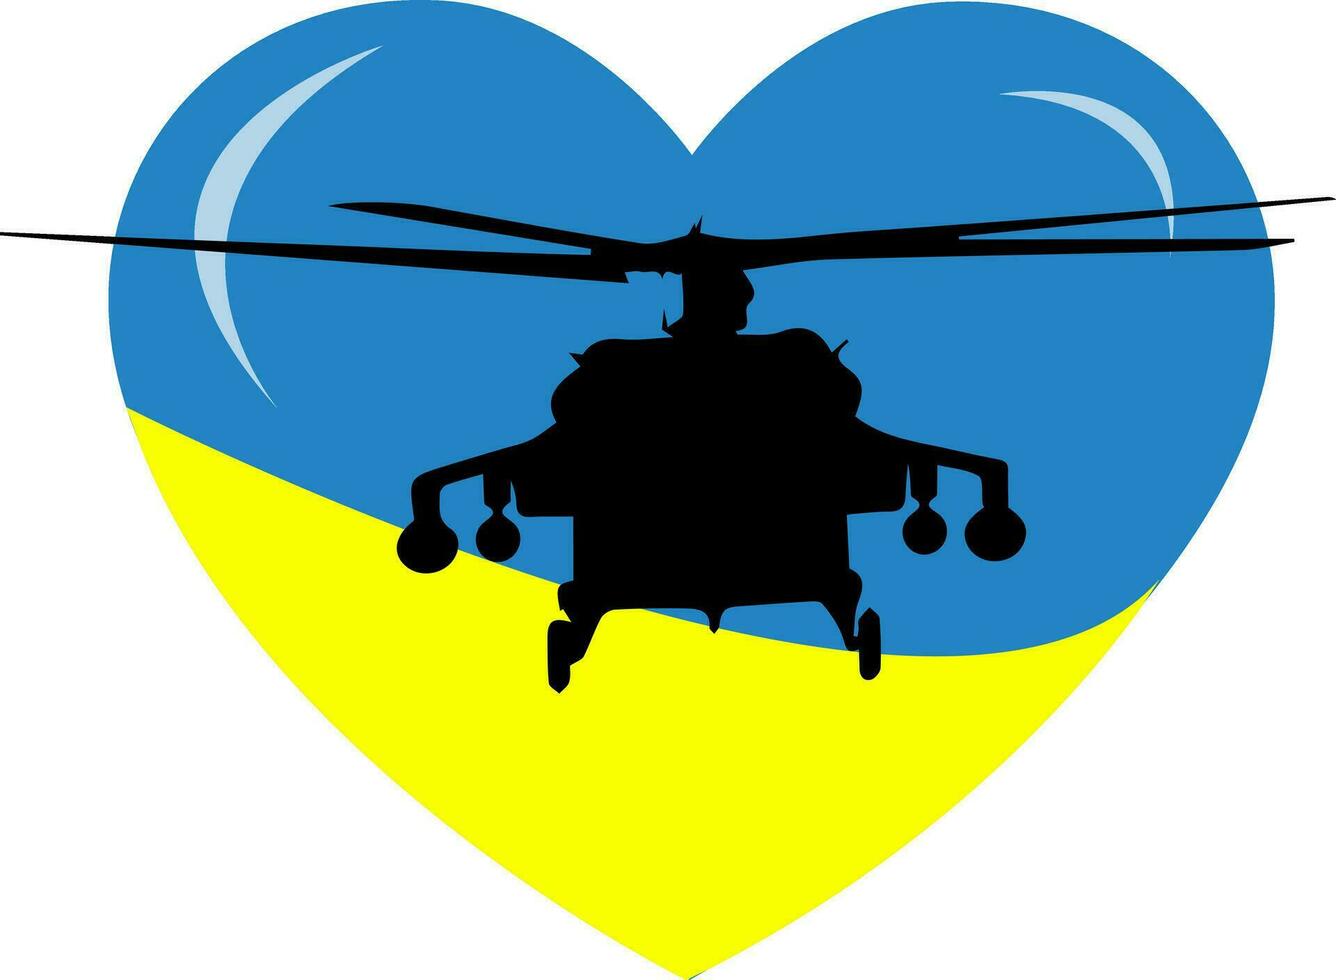 Heart shape and Ukrainian flag background vector